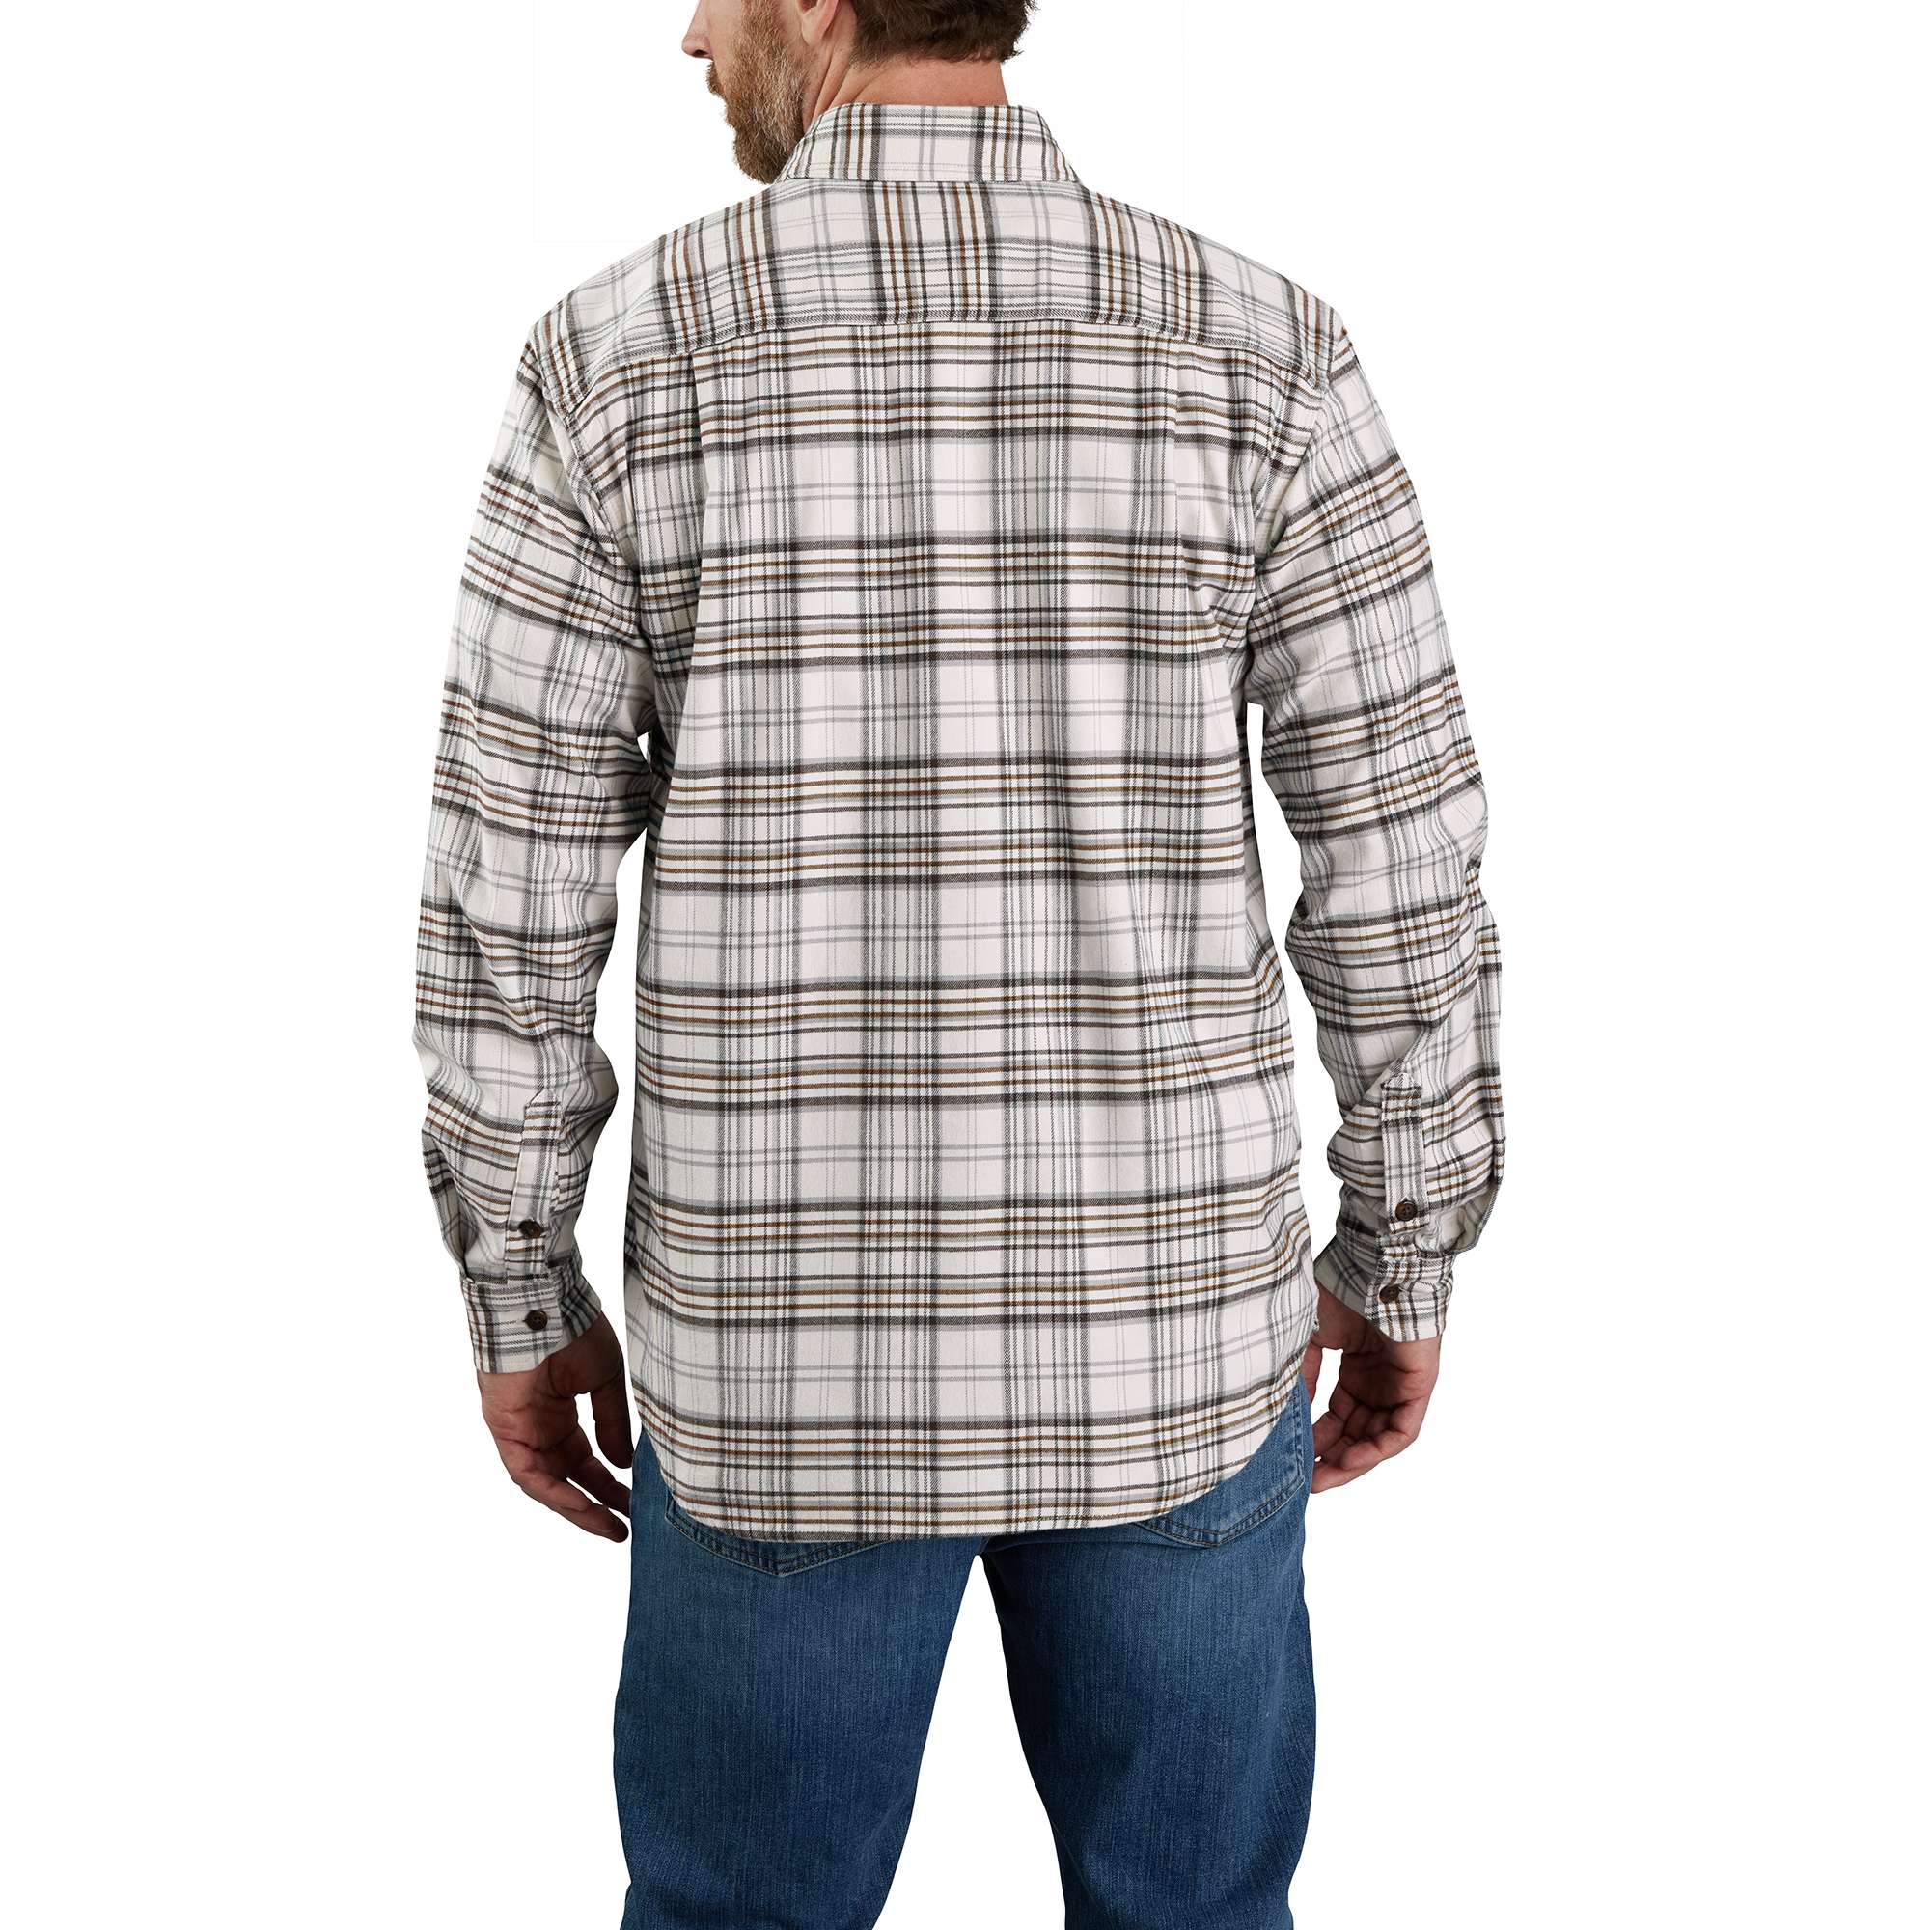 Carhartt 105945 Rugged Flex Relaxed Fit Plaid shirt